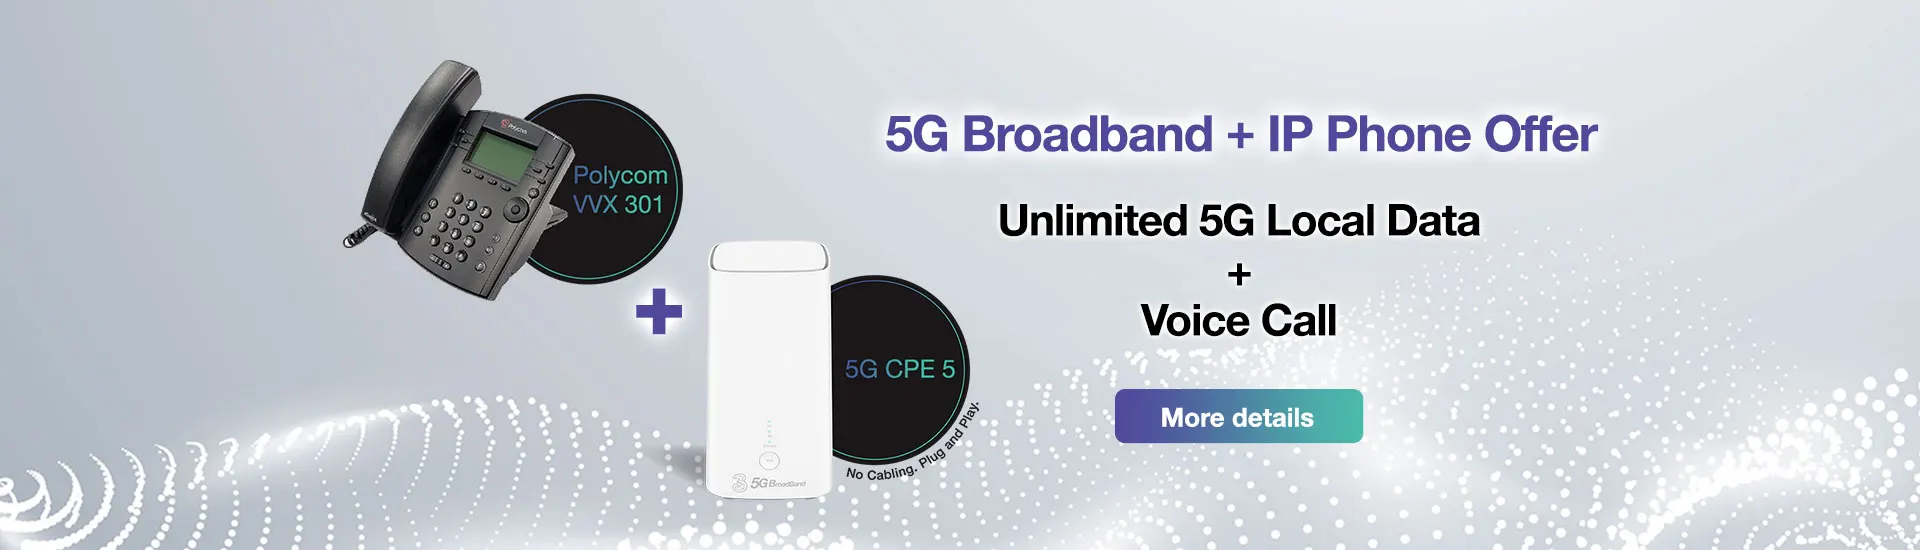 5G Broadband + IP Phone Offer